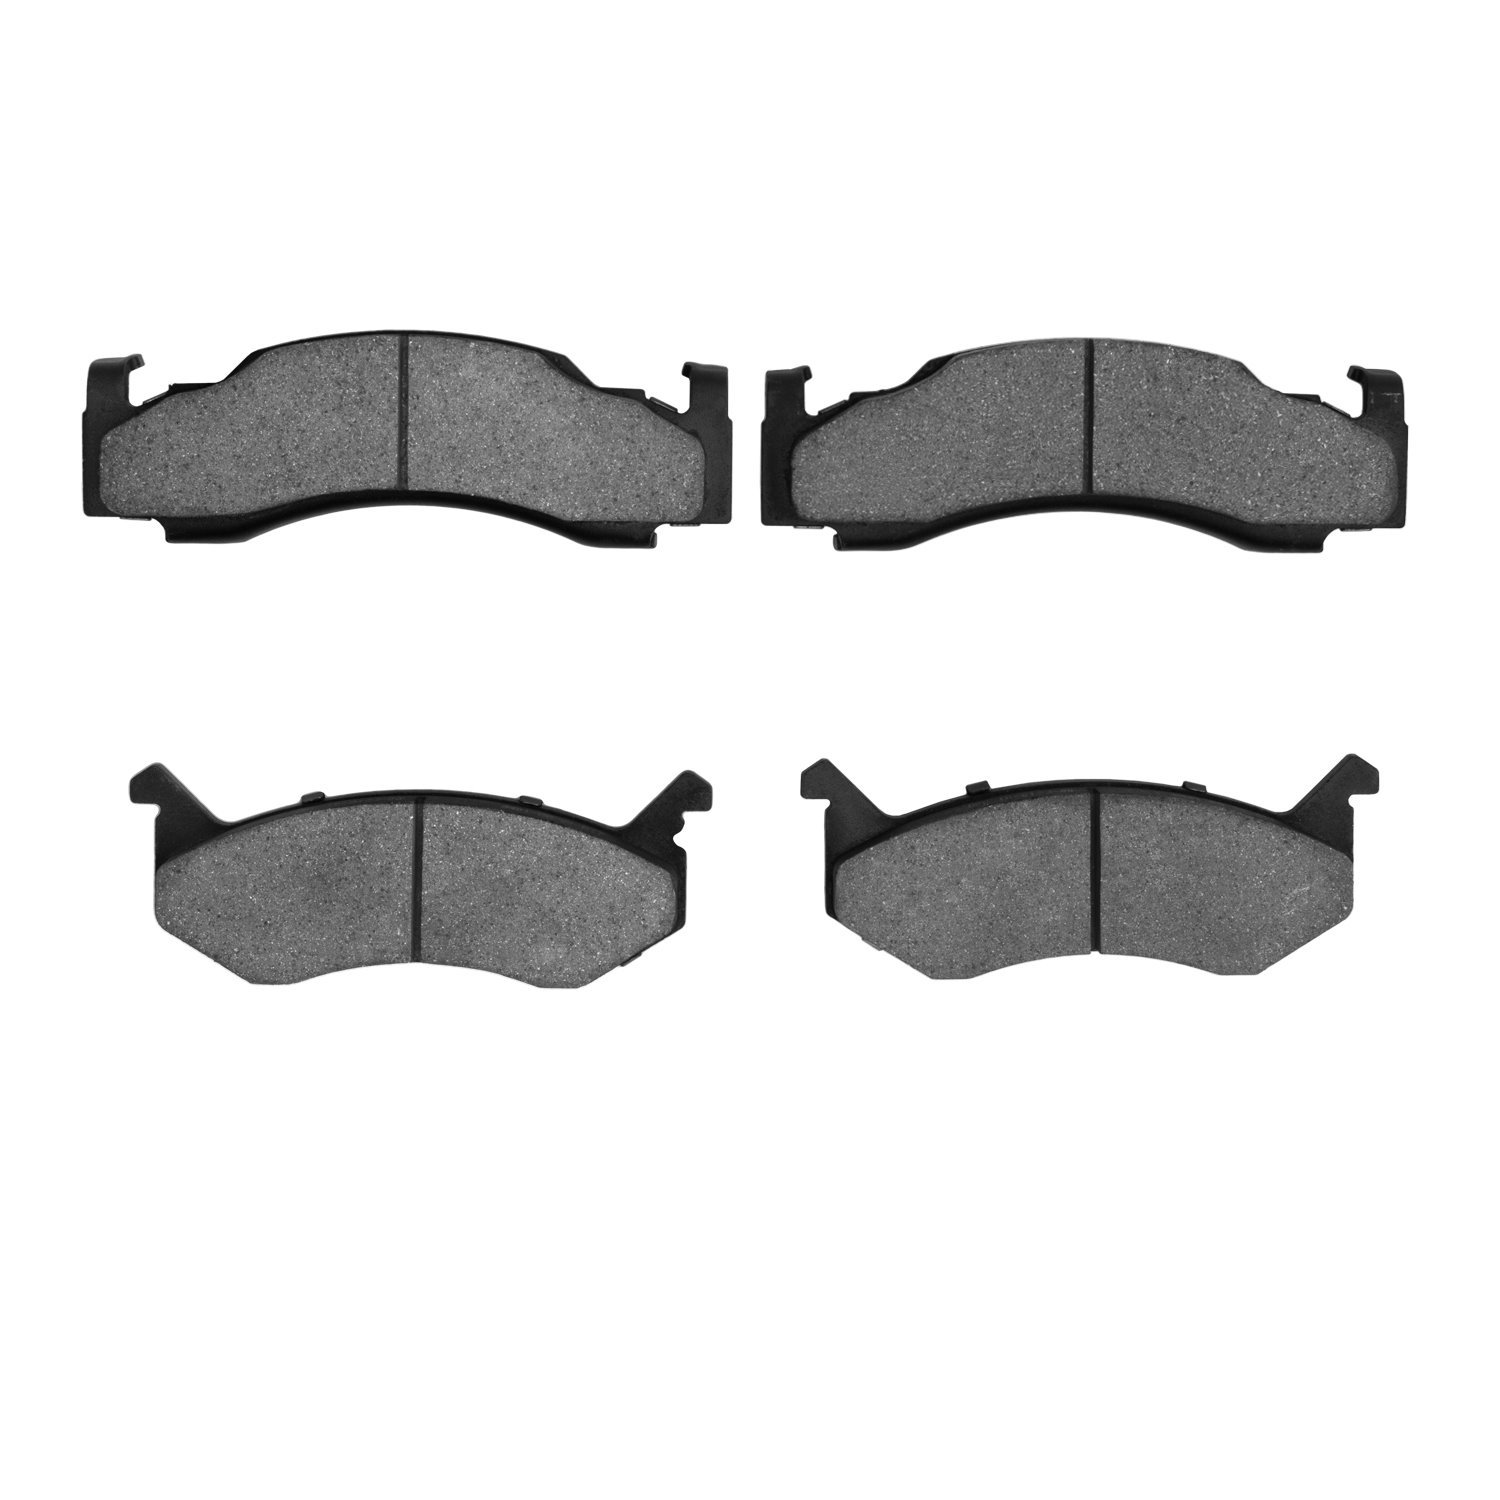 Super-Duty Brake Pads, 1973-1997 Mopar, Position: Front